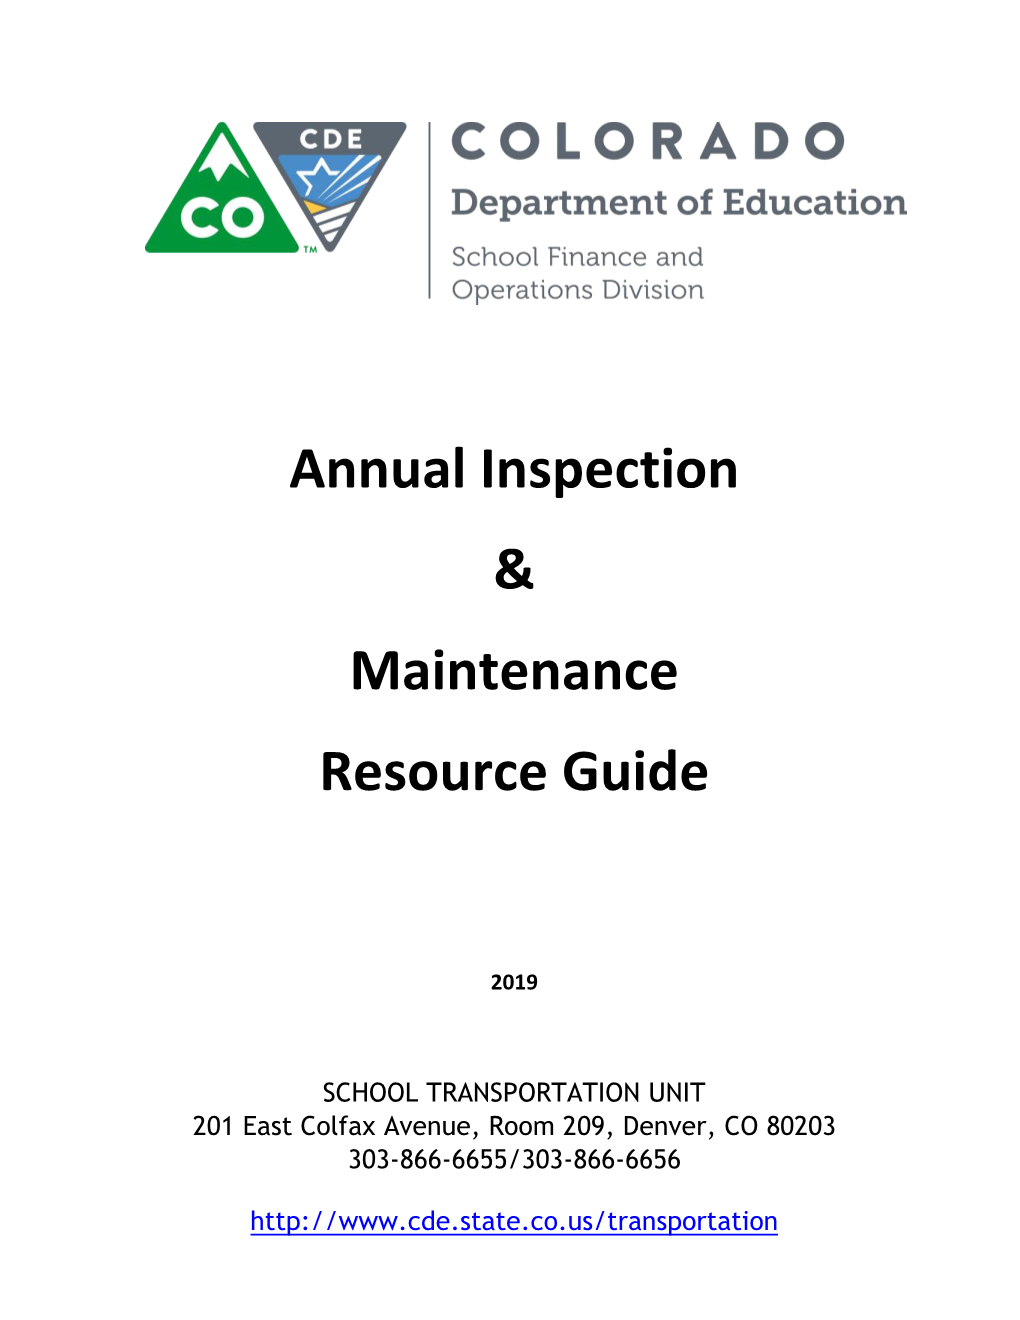 School Transportation Technician Annual Inspection Guide